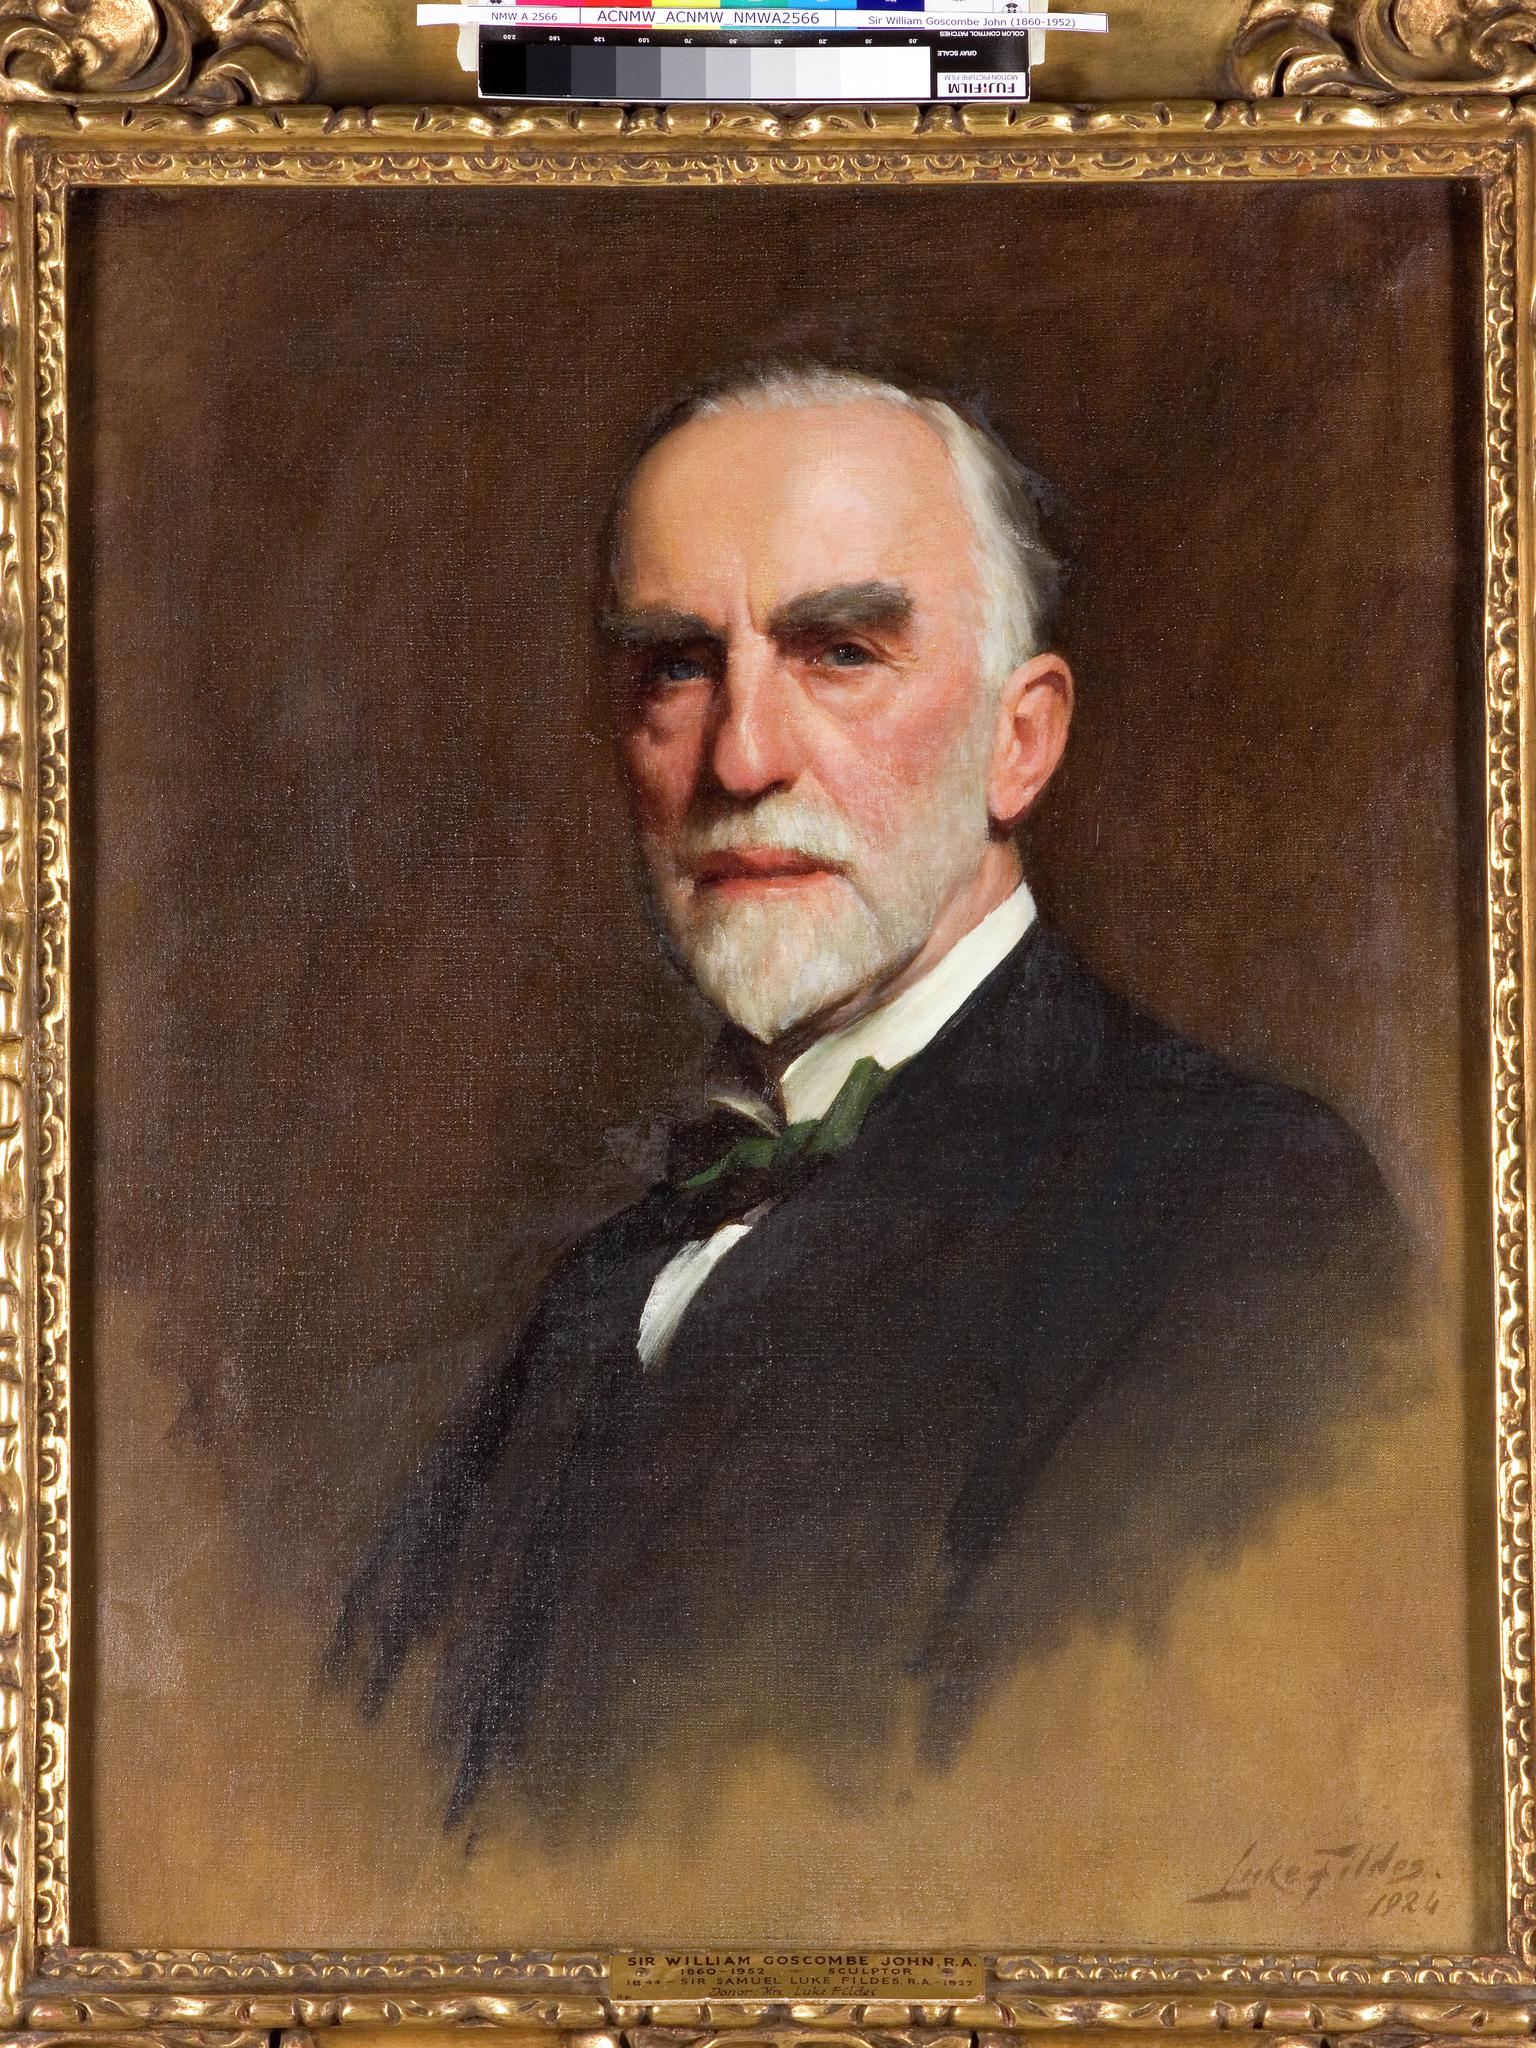 Syr William Goscombe John (1860-1952)